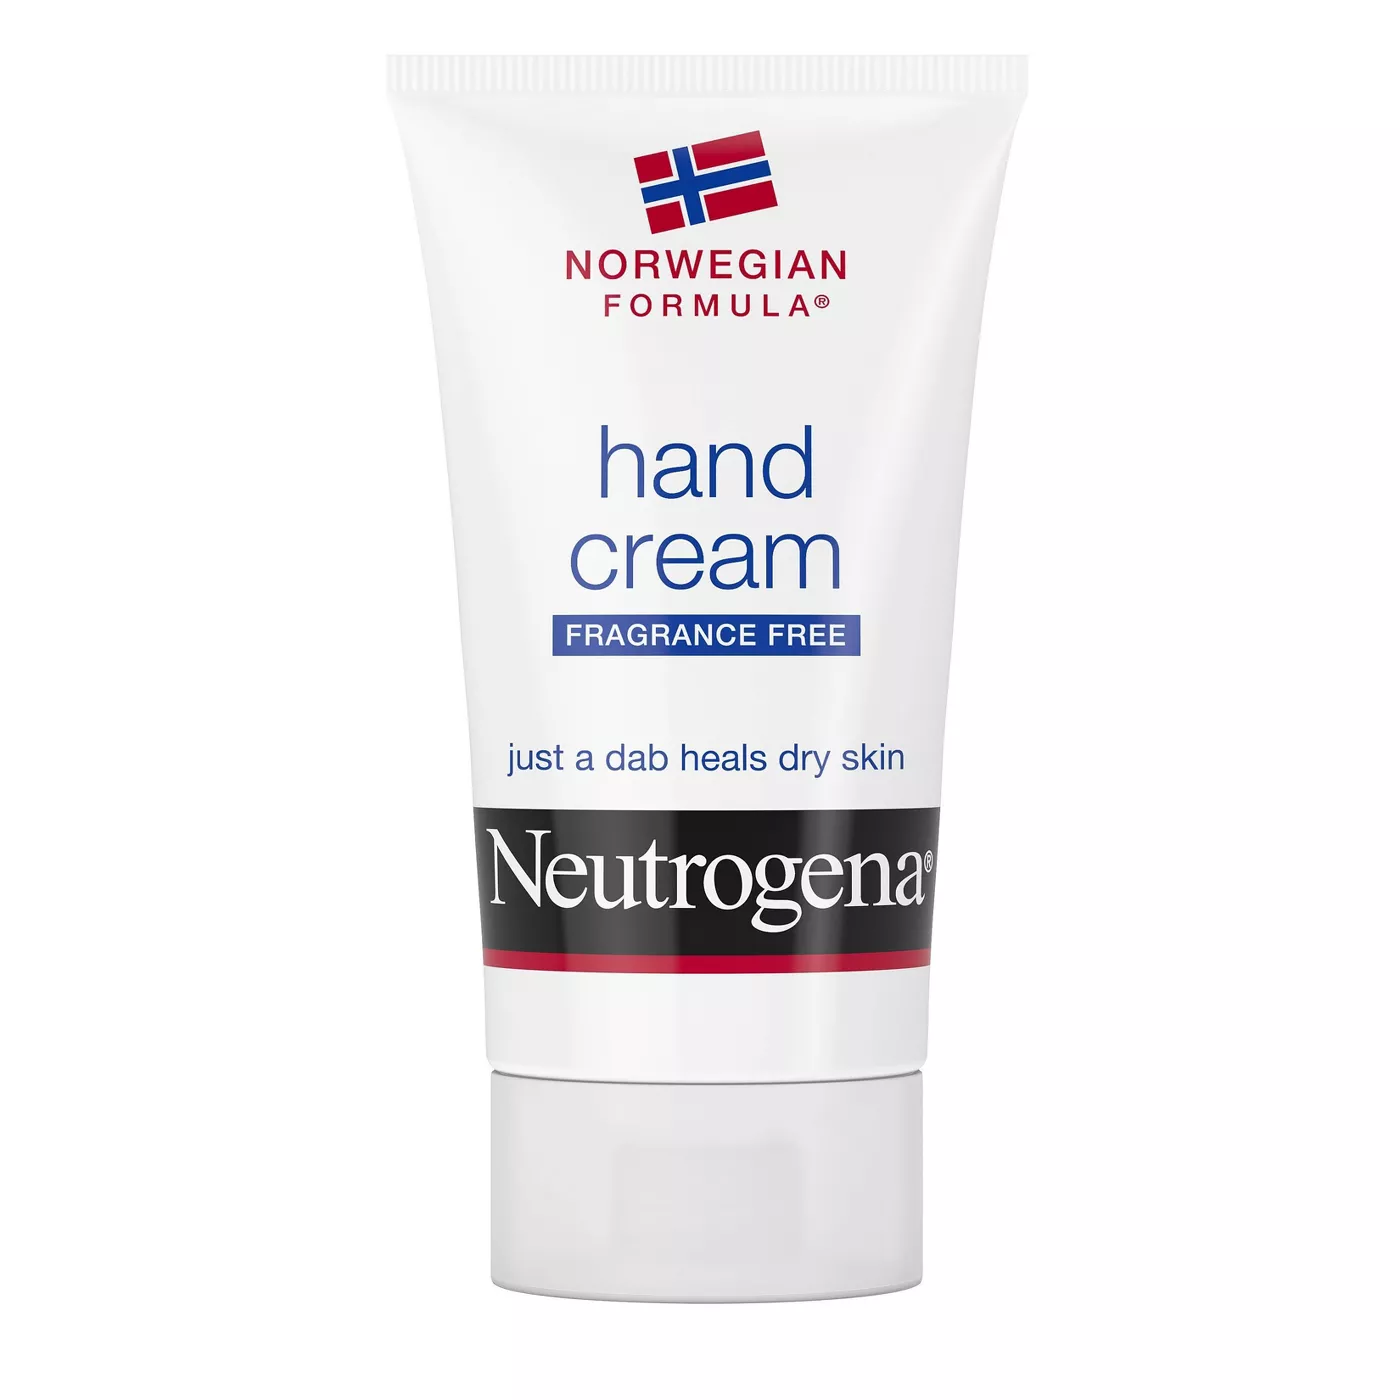 Neutrogena Norwegian Formula Hand Cream - 2oz - image 2 of 22